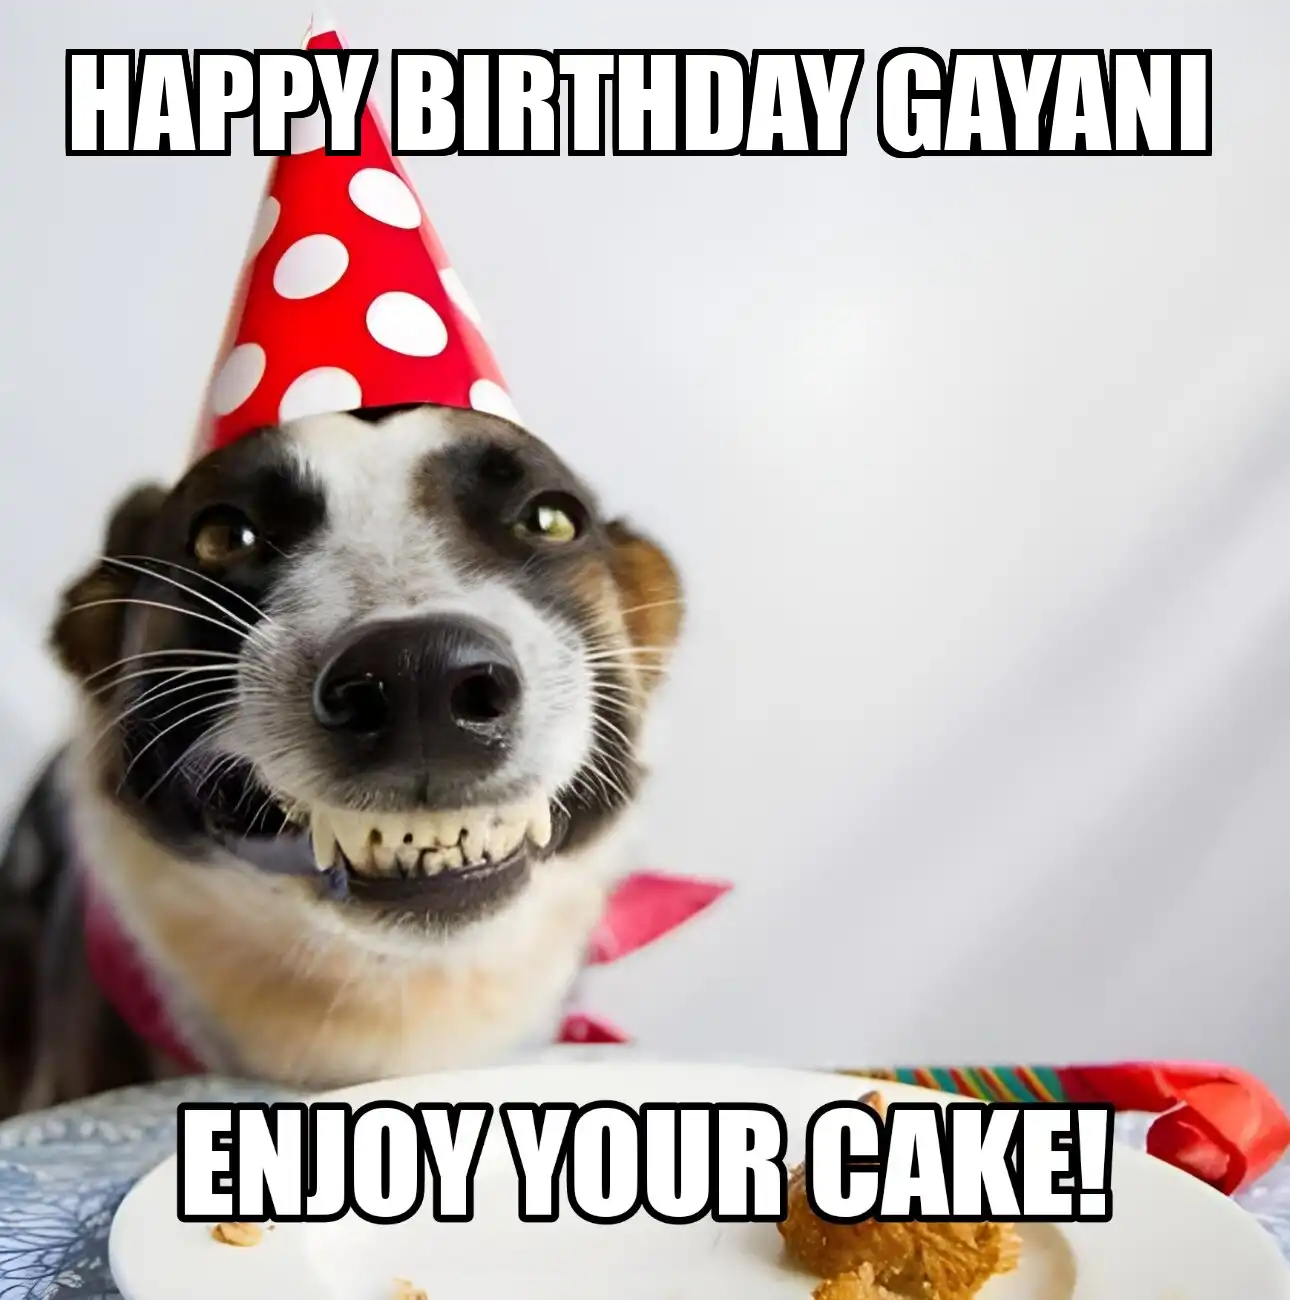 Happy Birthday Gayani Enjoy Your Cake Dog Meme